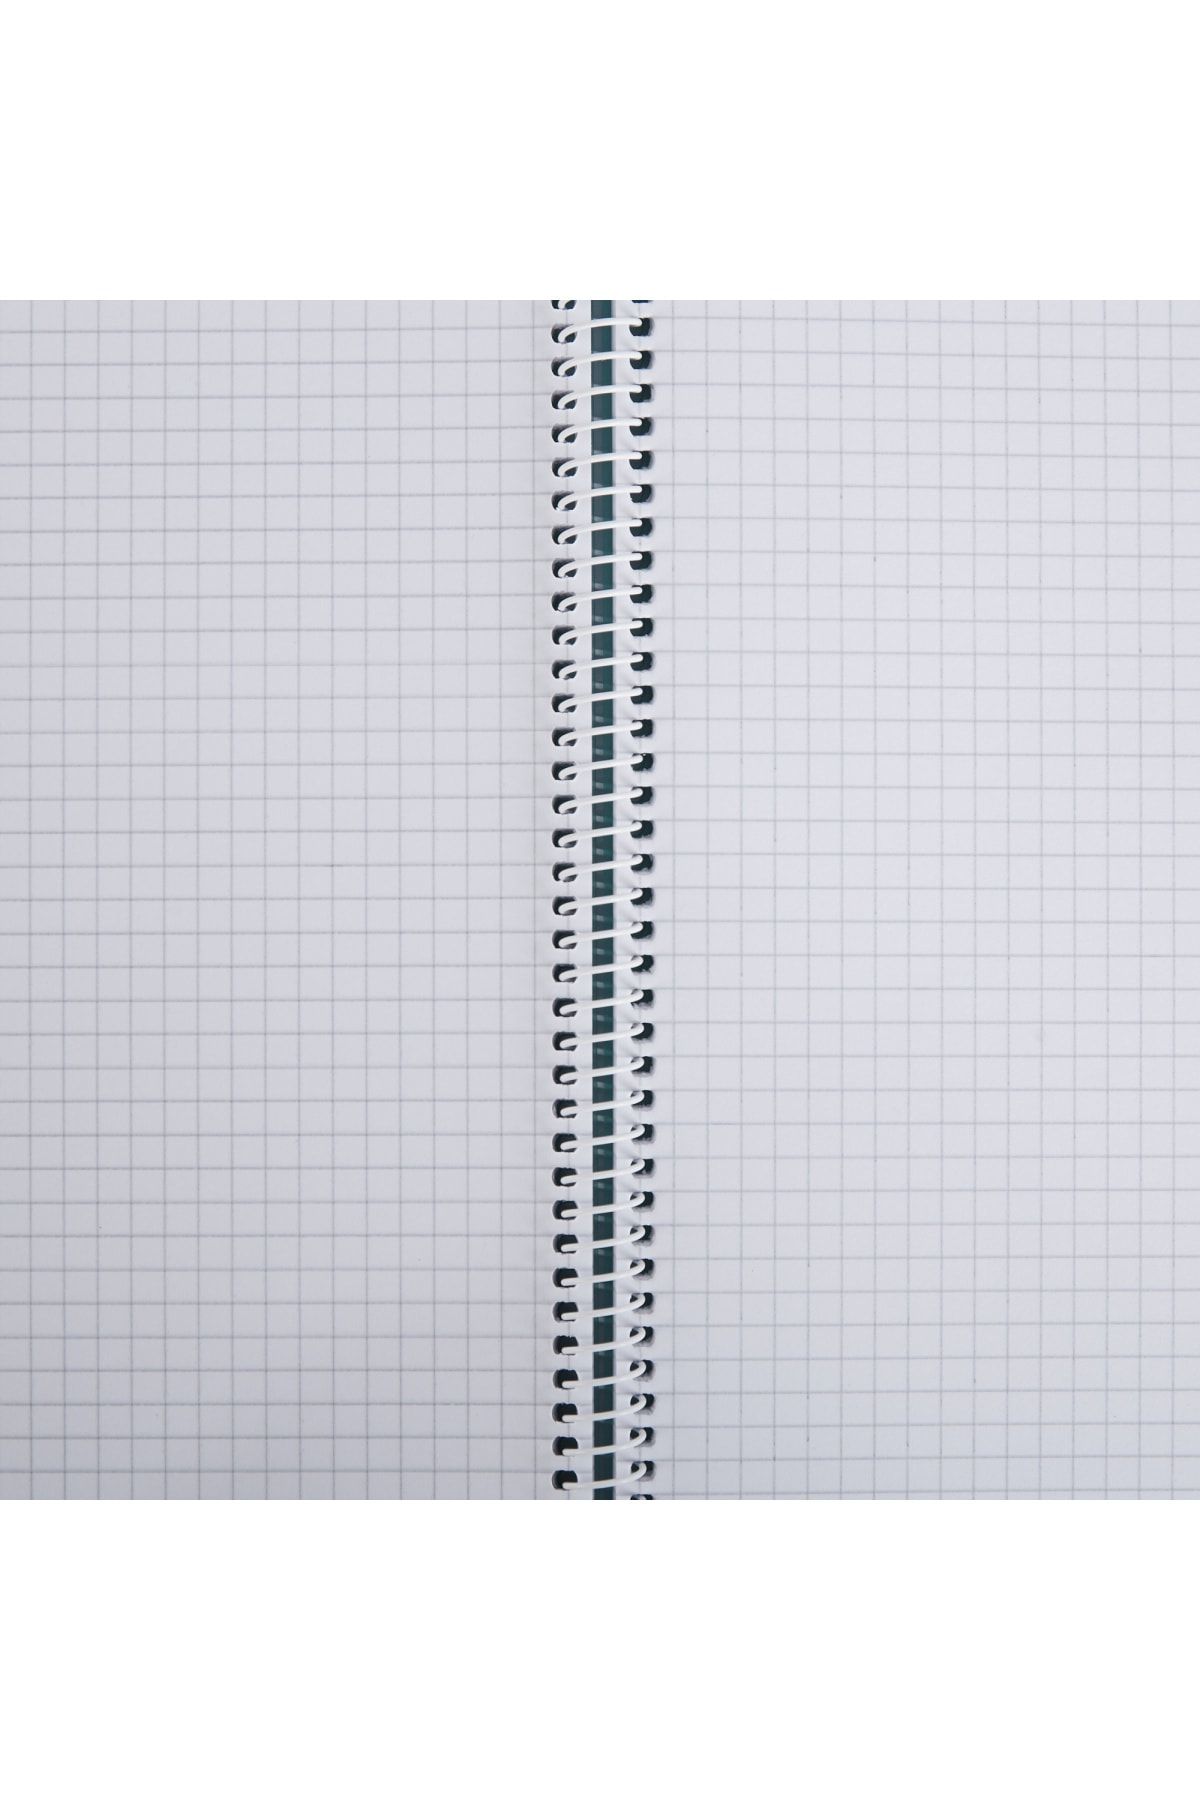 animeandyourworld Pixel Art Notebook 1 Piece Special Design A4 Size 21*29  Cm Wired Striped Large Size Notebook - Trendyol